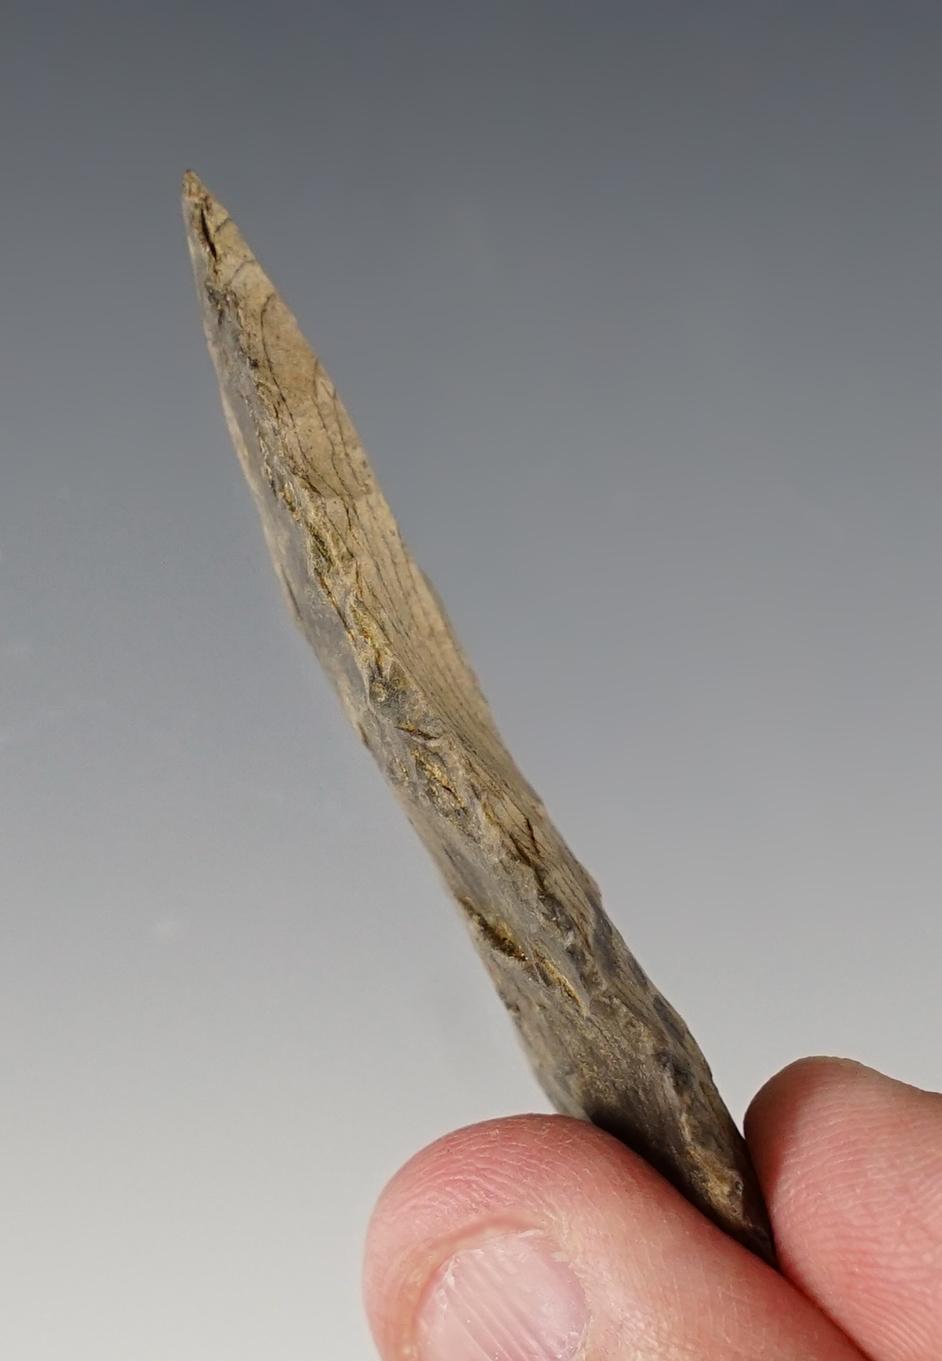 Nice 2 5/16" Lerma Blade found in Lincoln Co., Colorado.